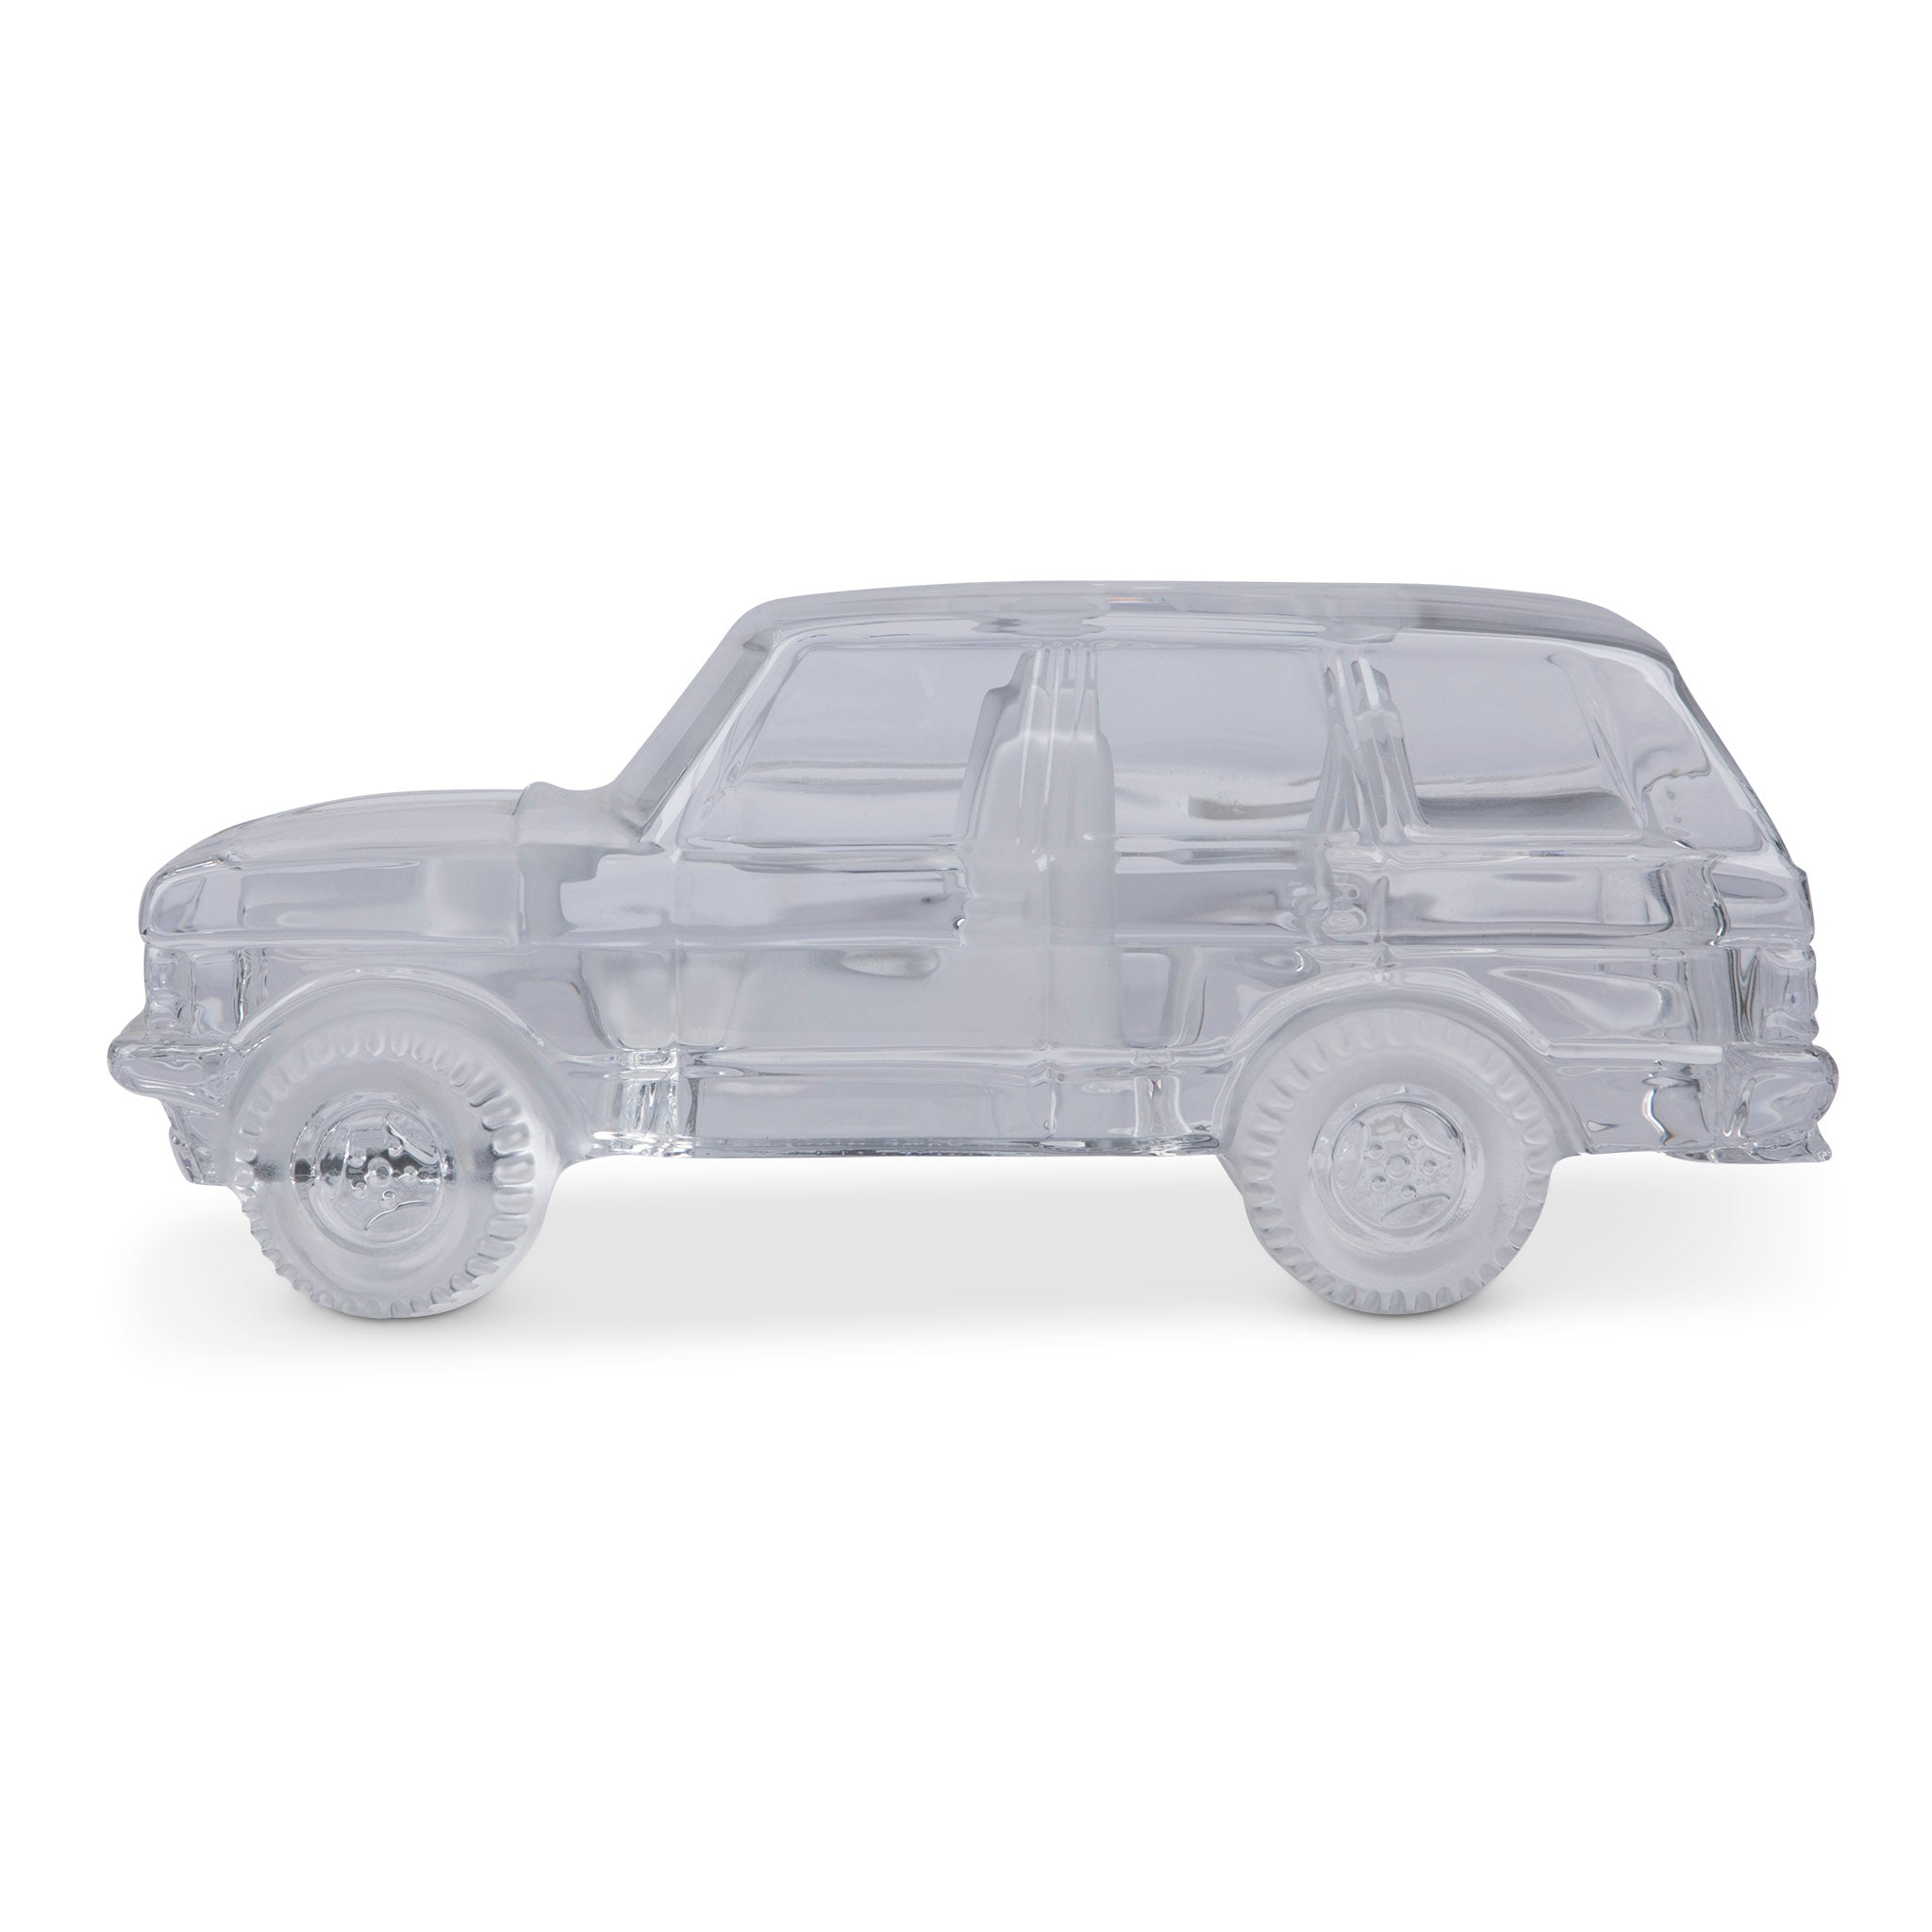 Daum Crystal Range Rover Model